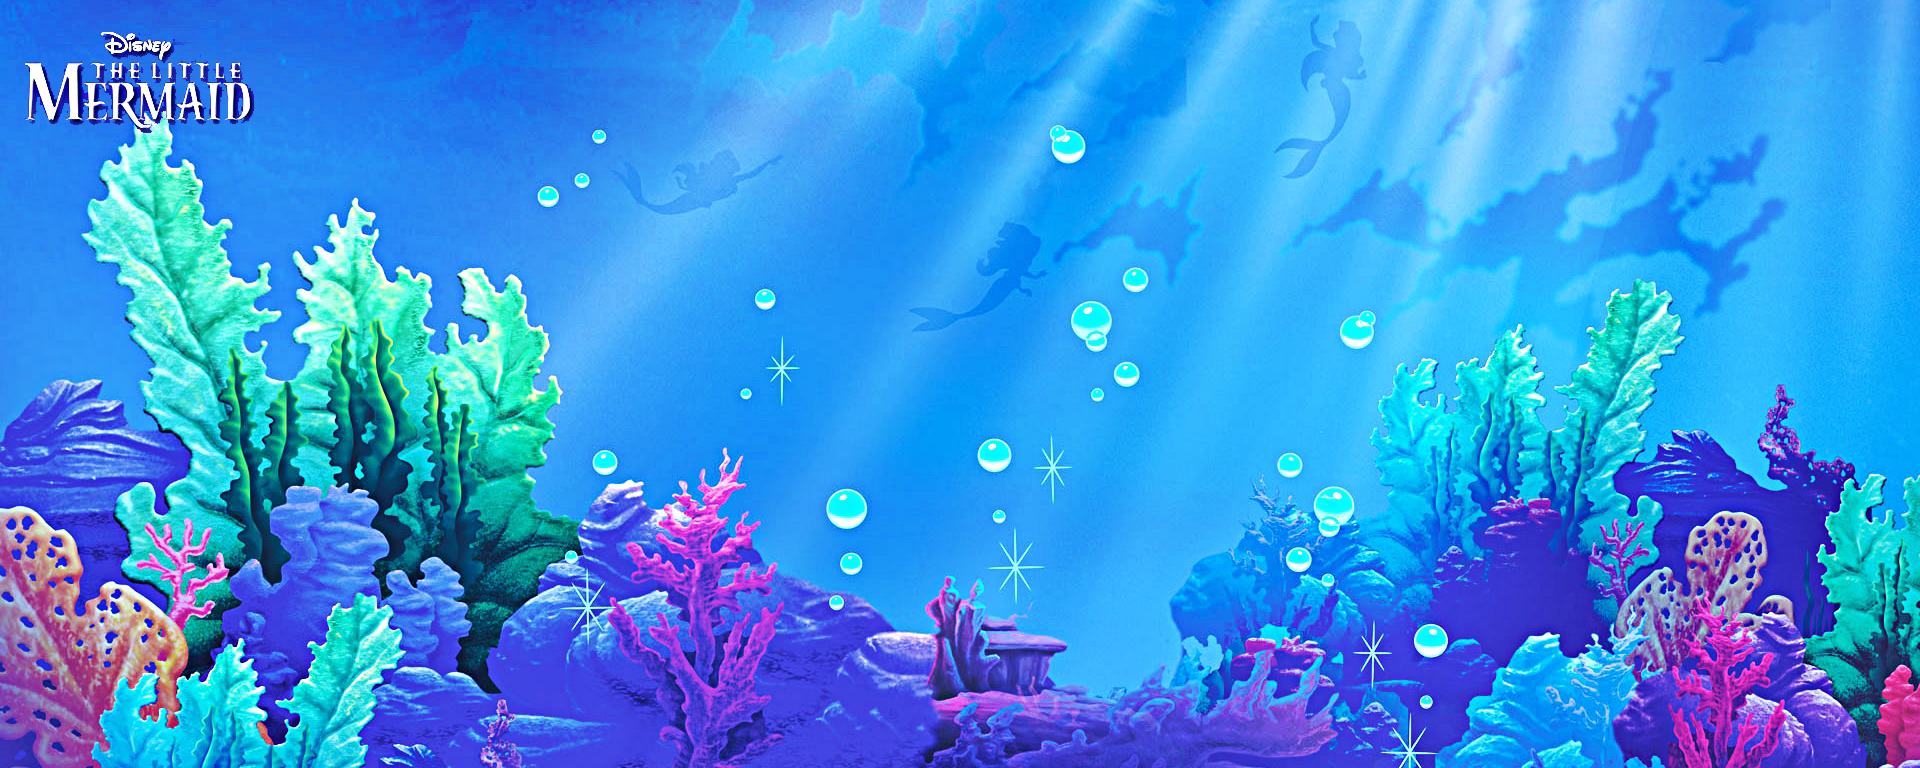 Подводное царство рисунок